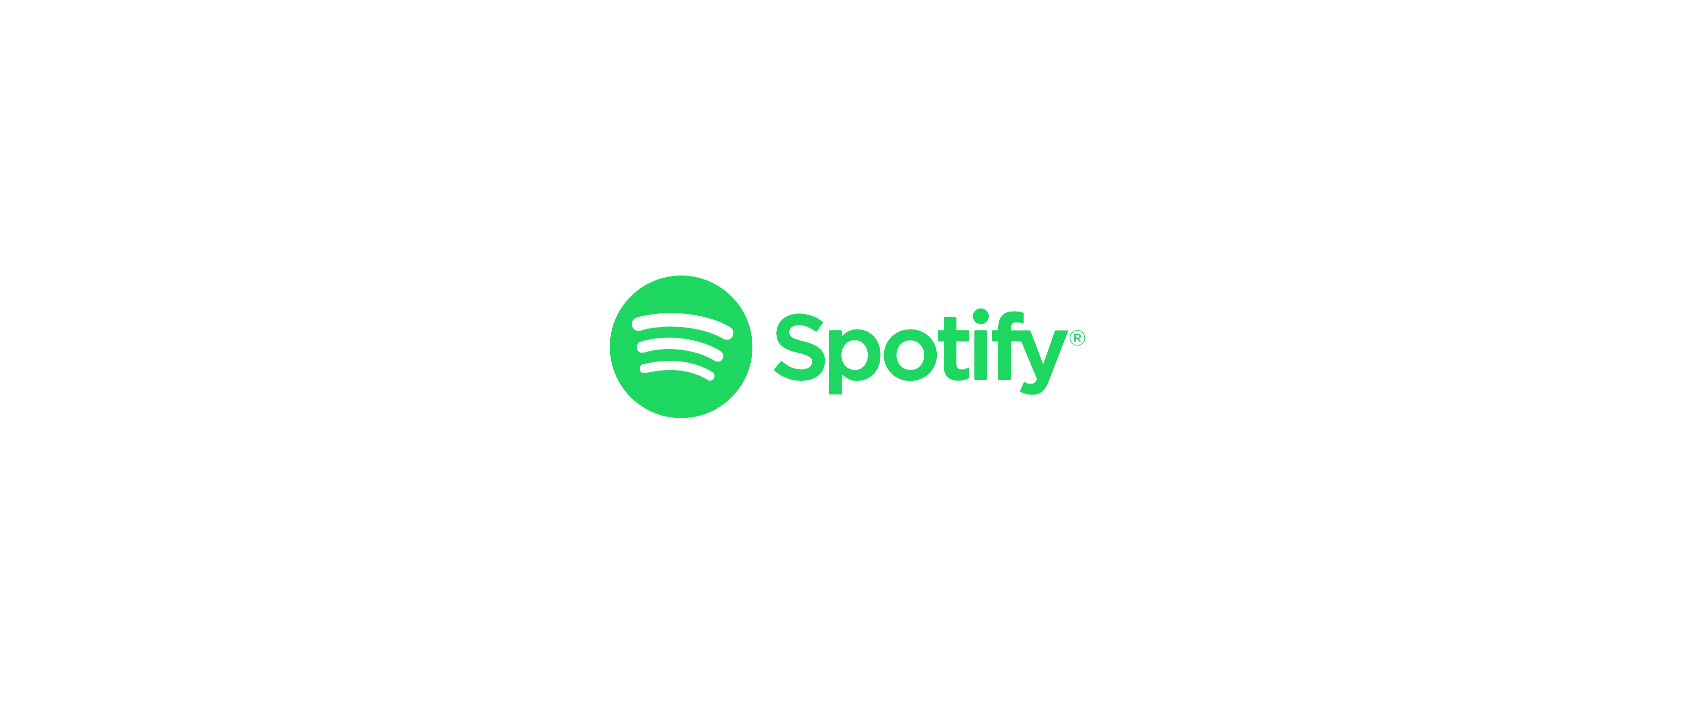 Spotify-resize.png